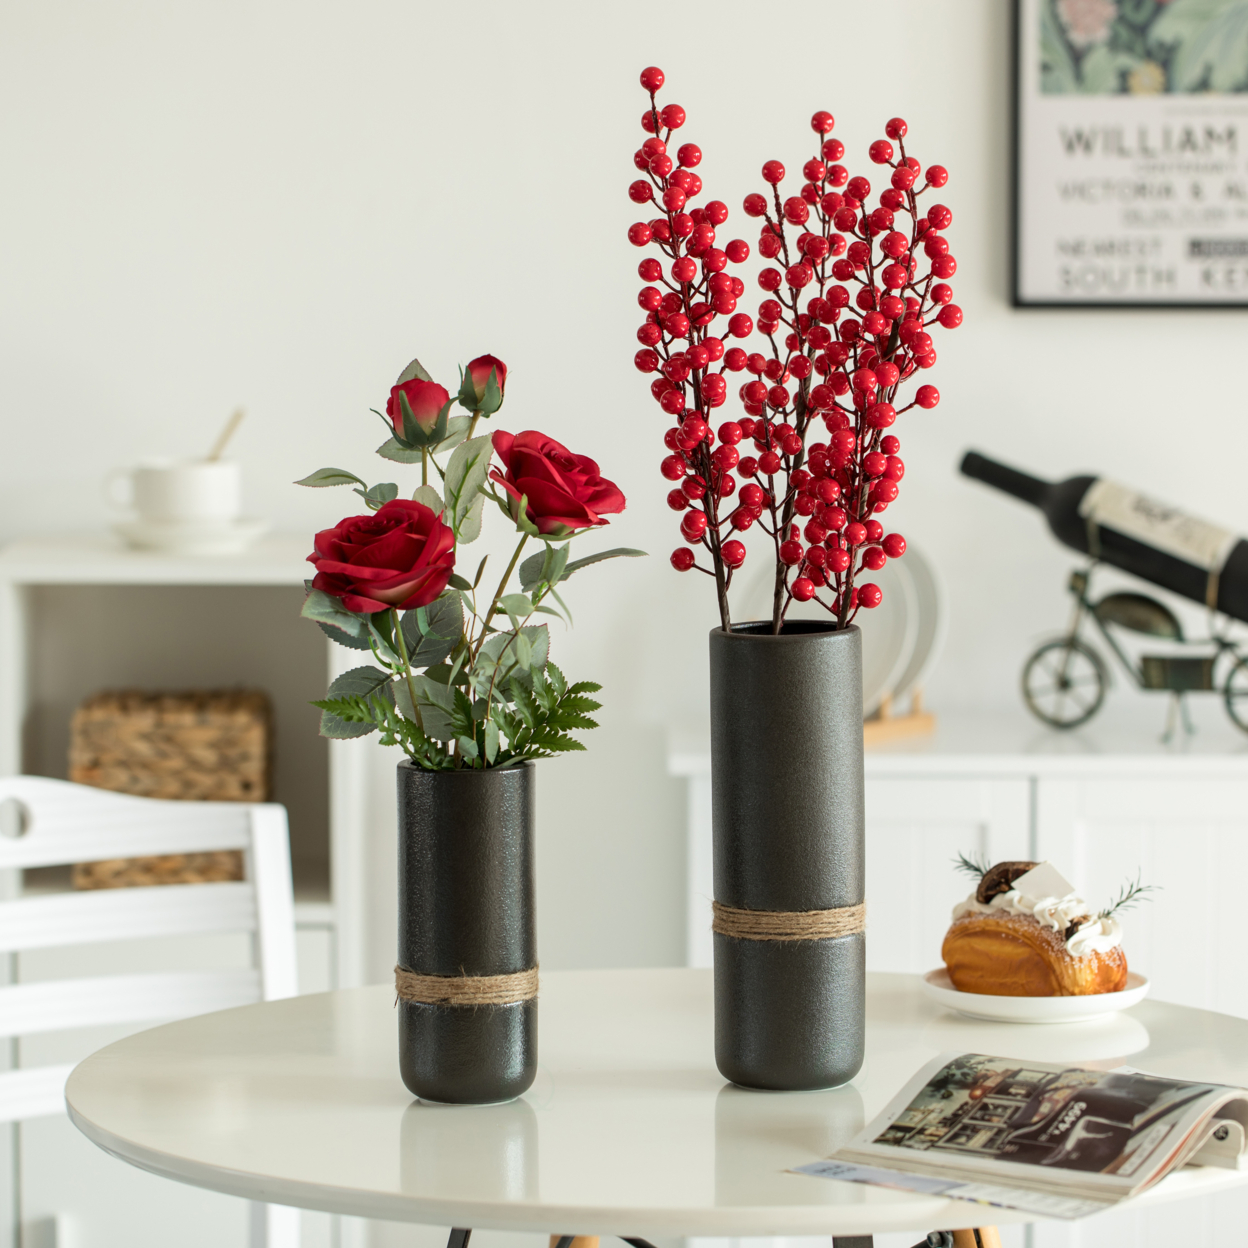 Decorative Modern Ceramic Cylinder Shape Table Vase Flower Holder With Rope - Small White